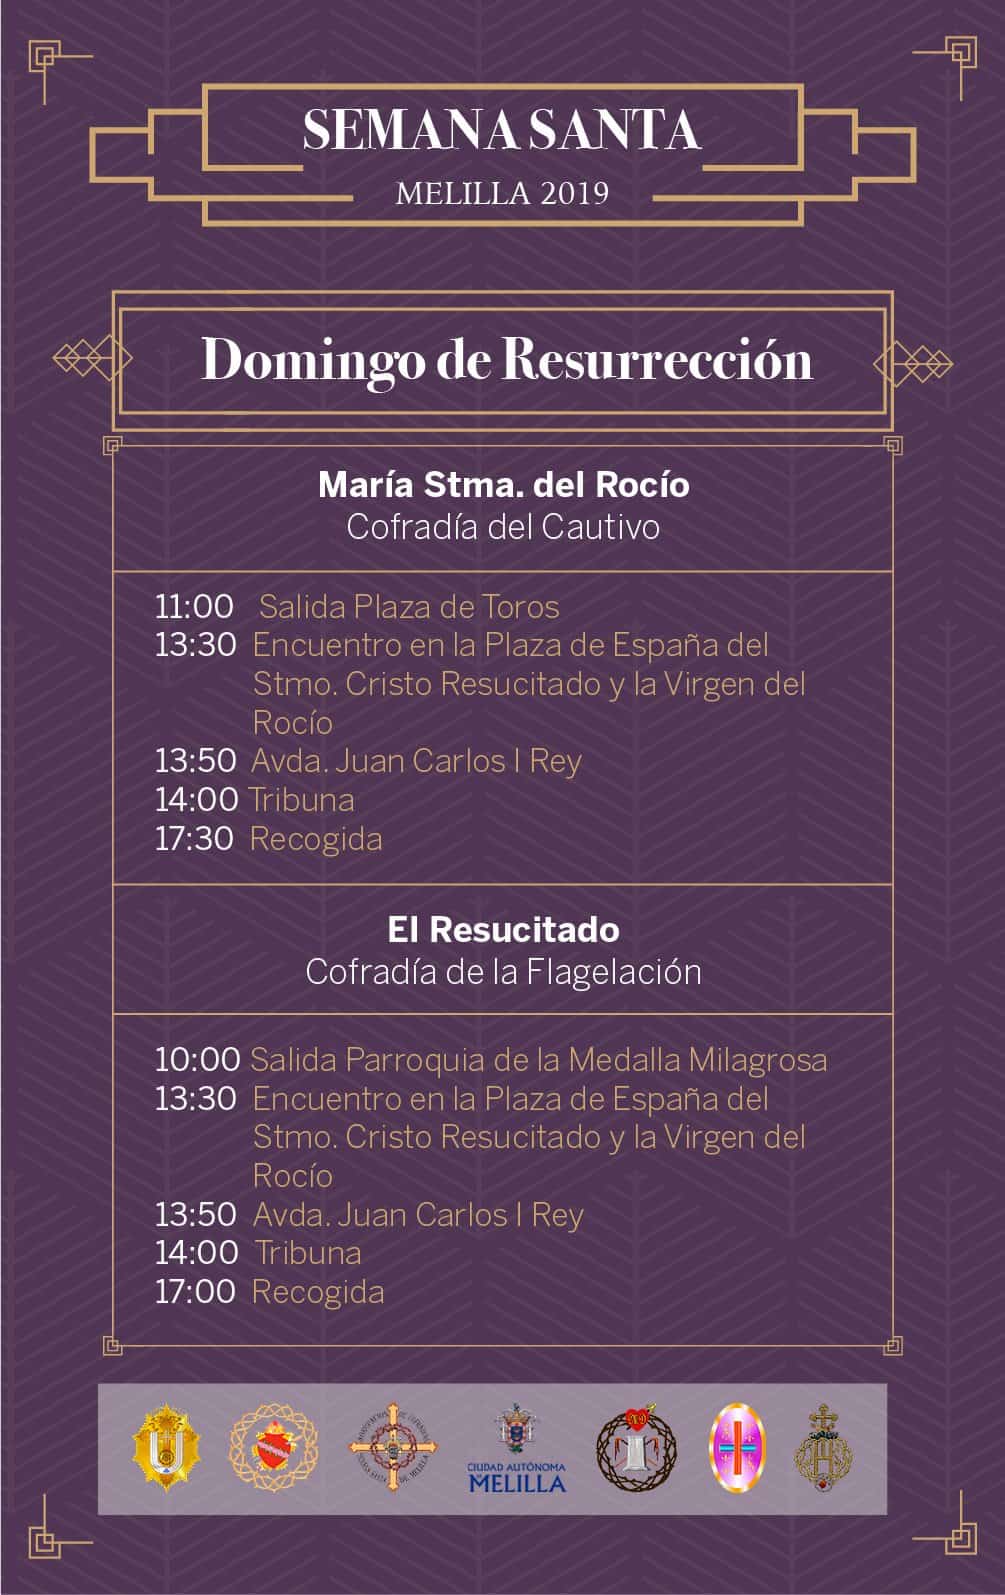 Domingo de Resurrección Semana Santa Melilla 2019